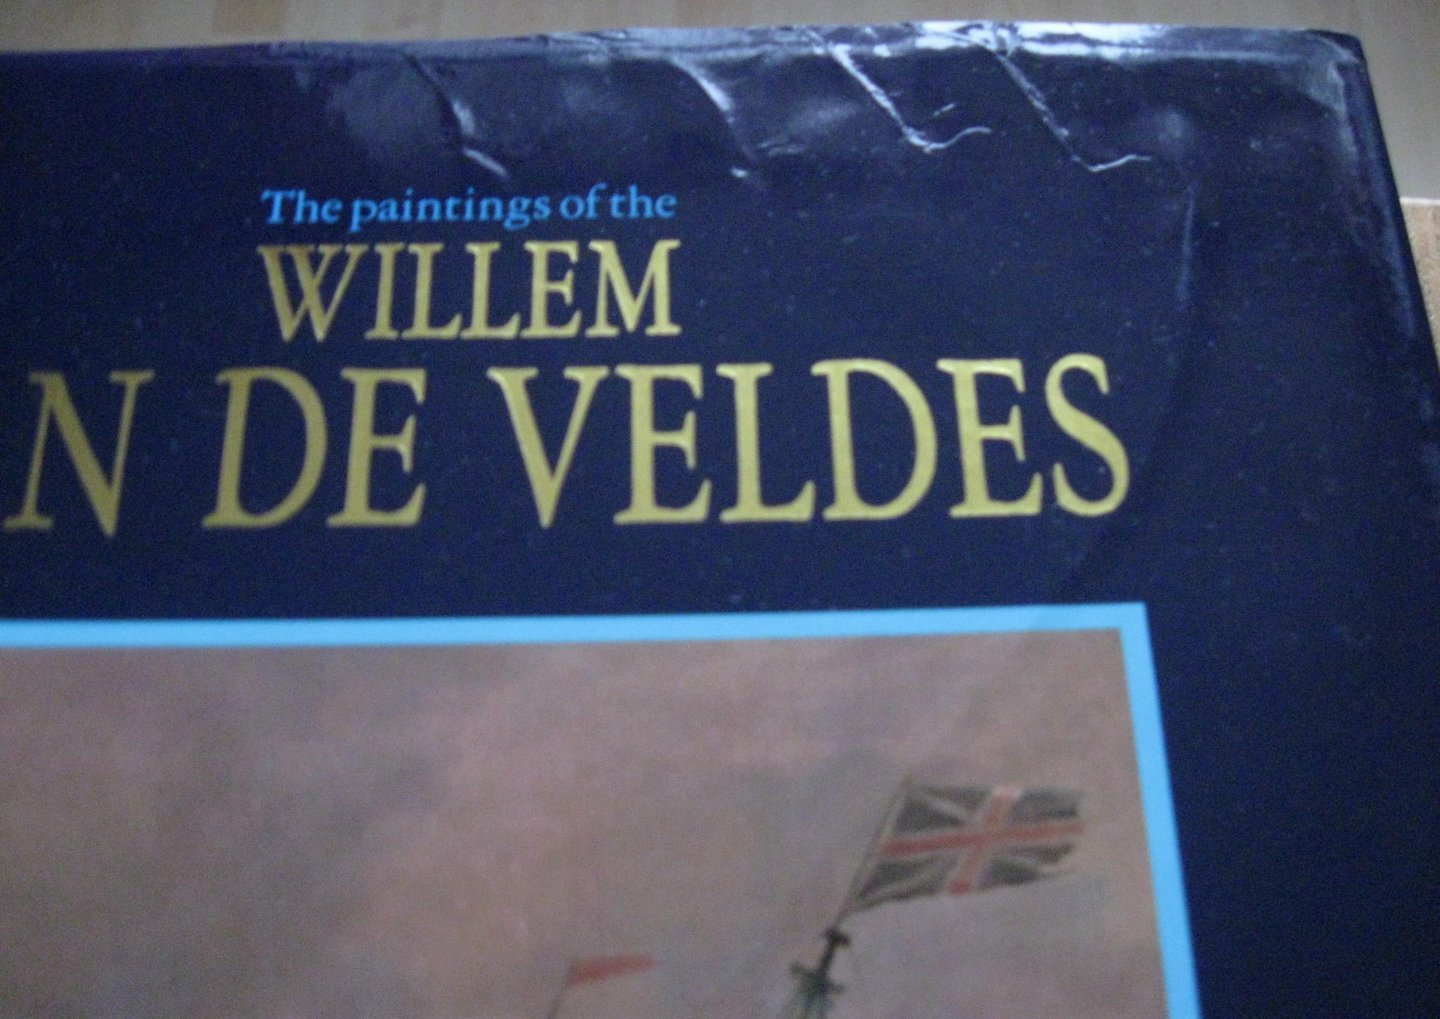 Robinson, M.S. - The paintings of Willem van de Veldes Vol 1 & 2